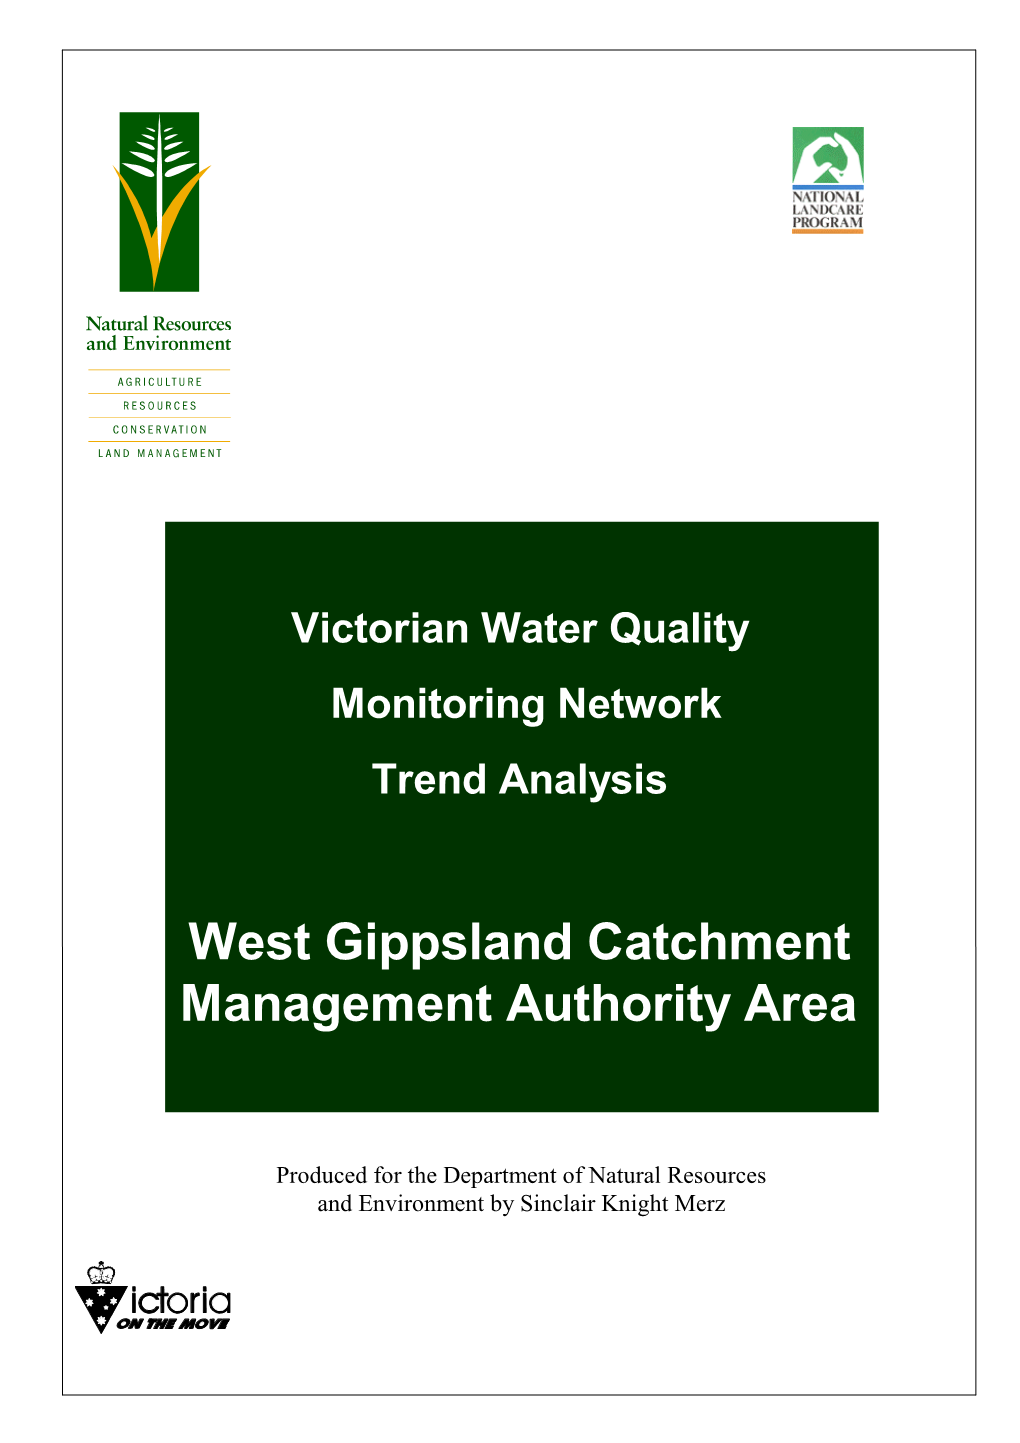 West Gippsland Catchment Management Authority Area